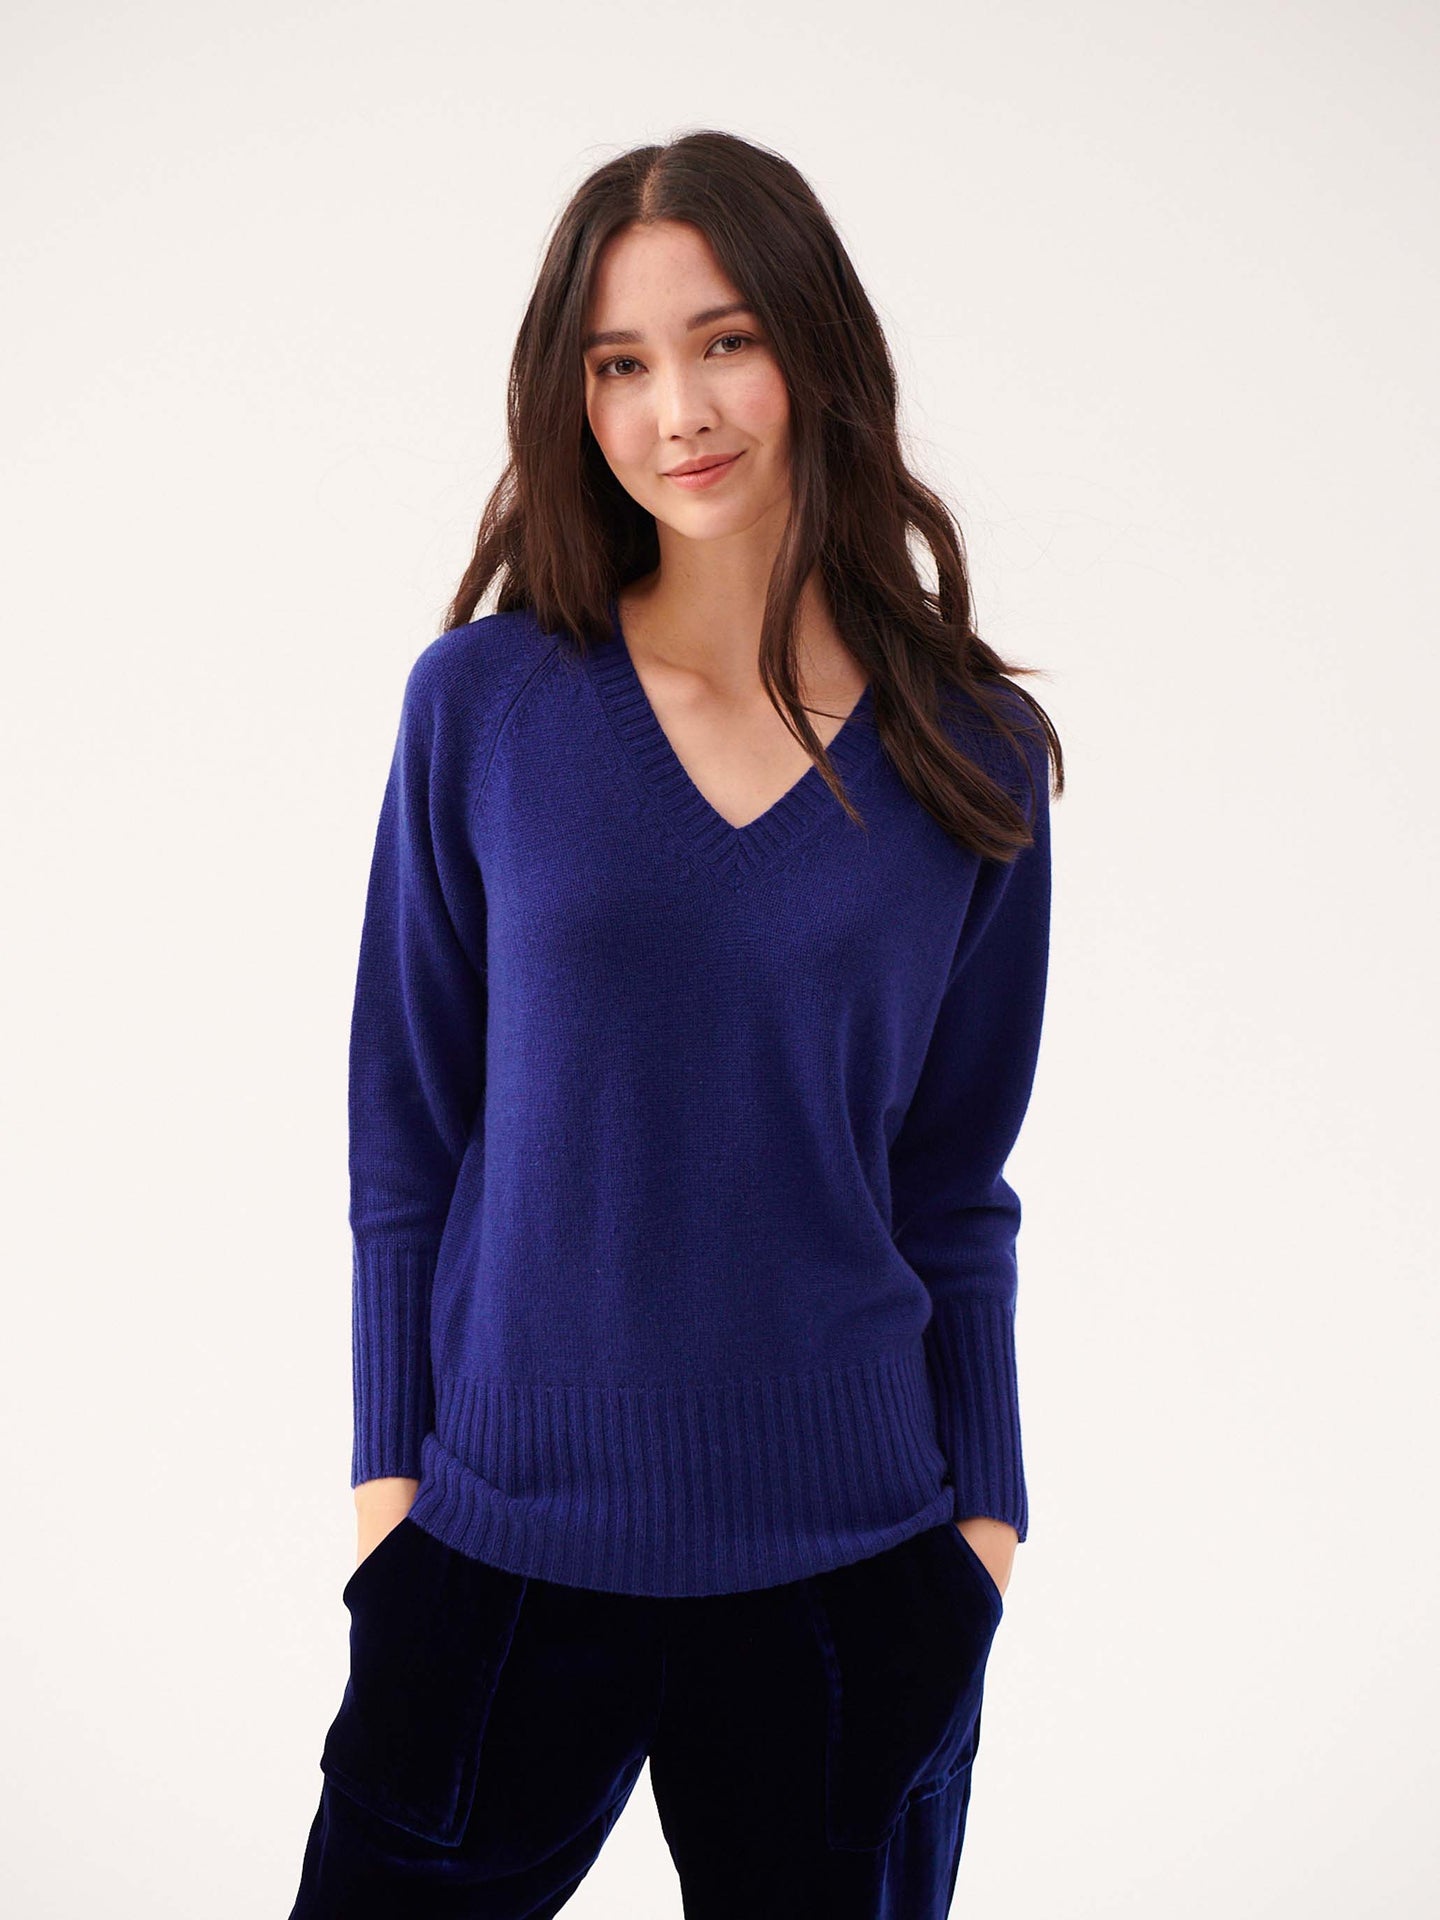 Mari perfect cashmere sweater - Navy